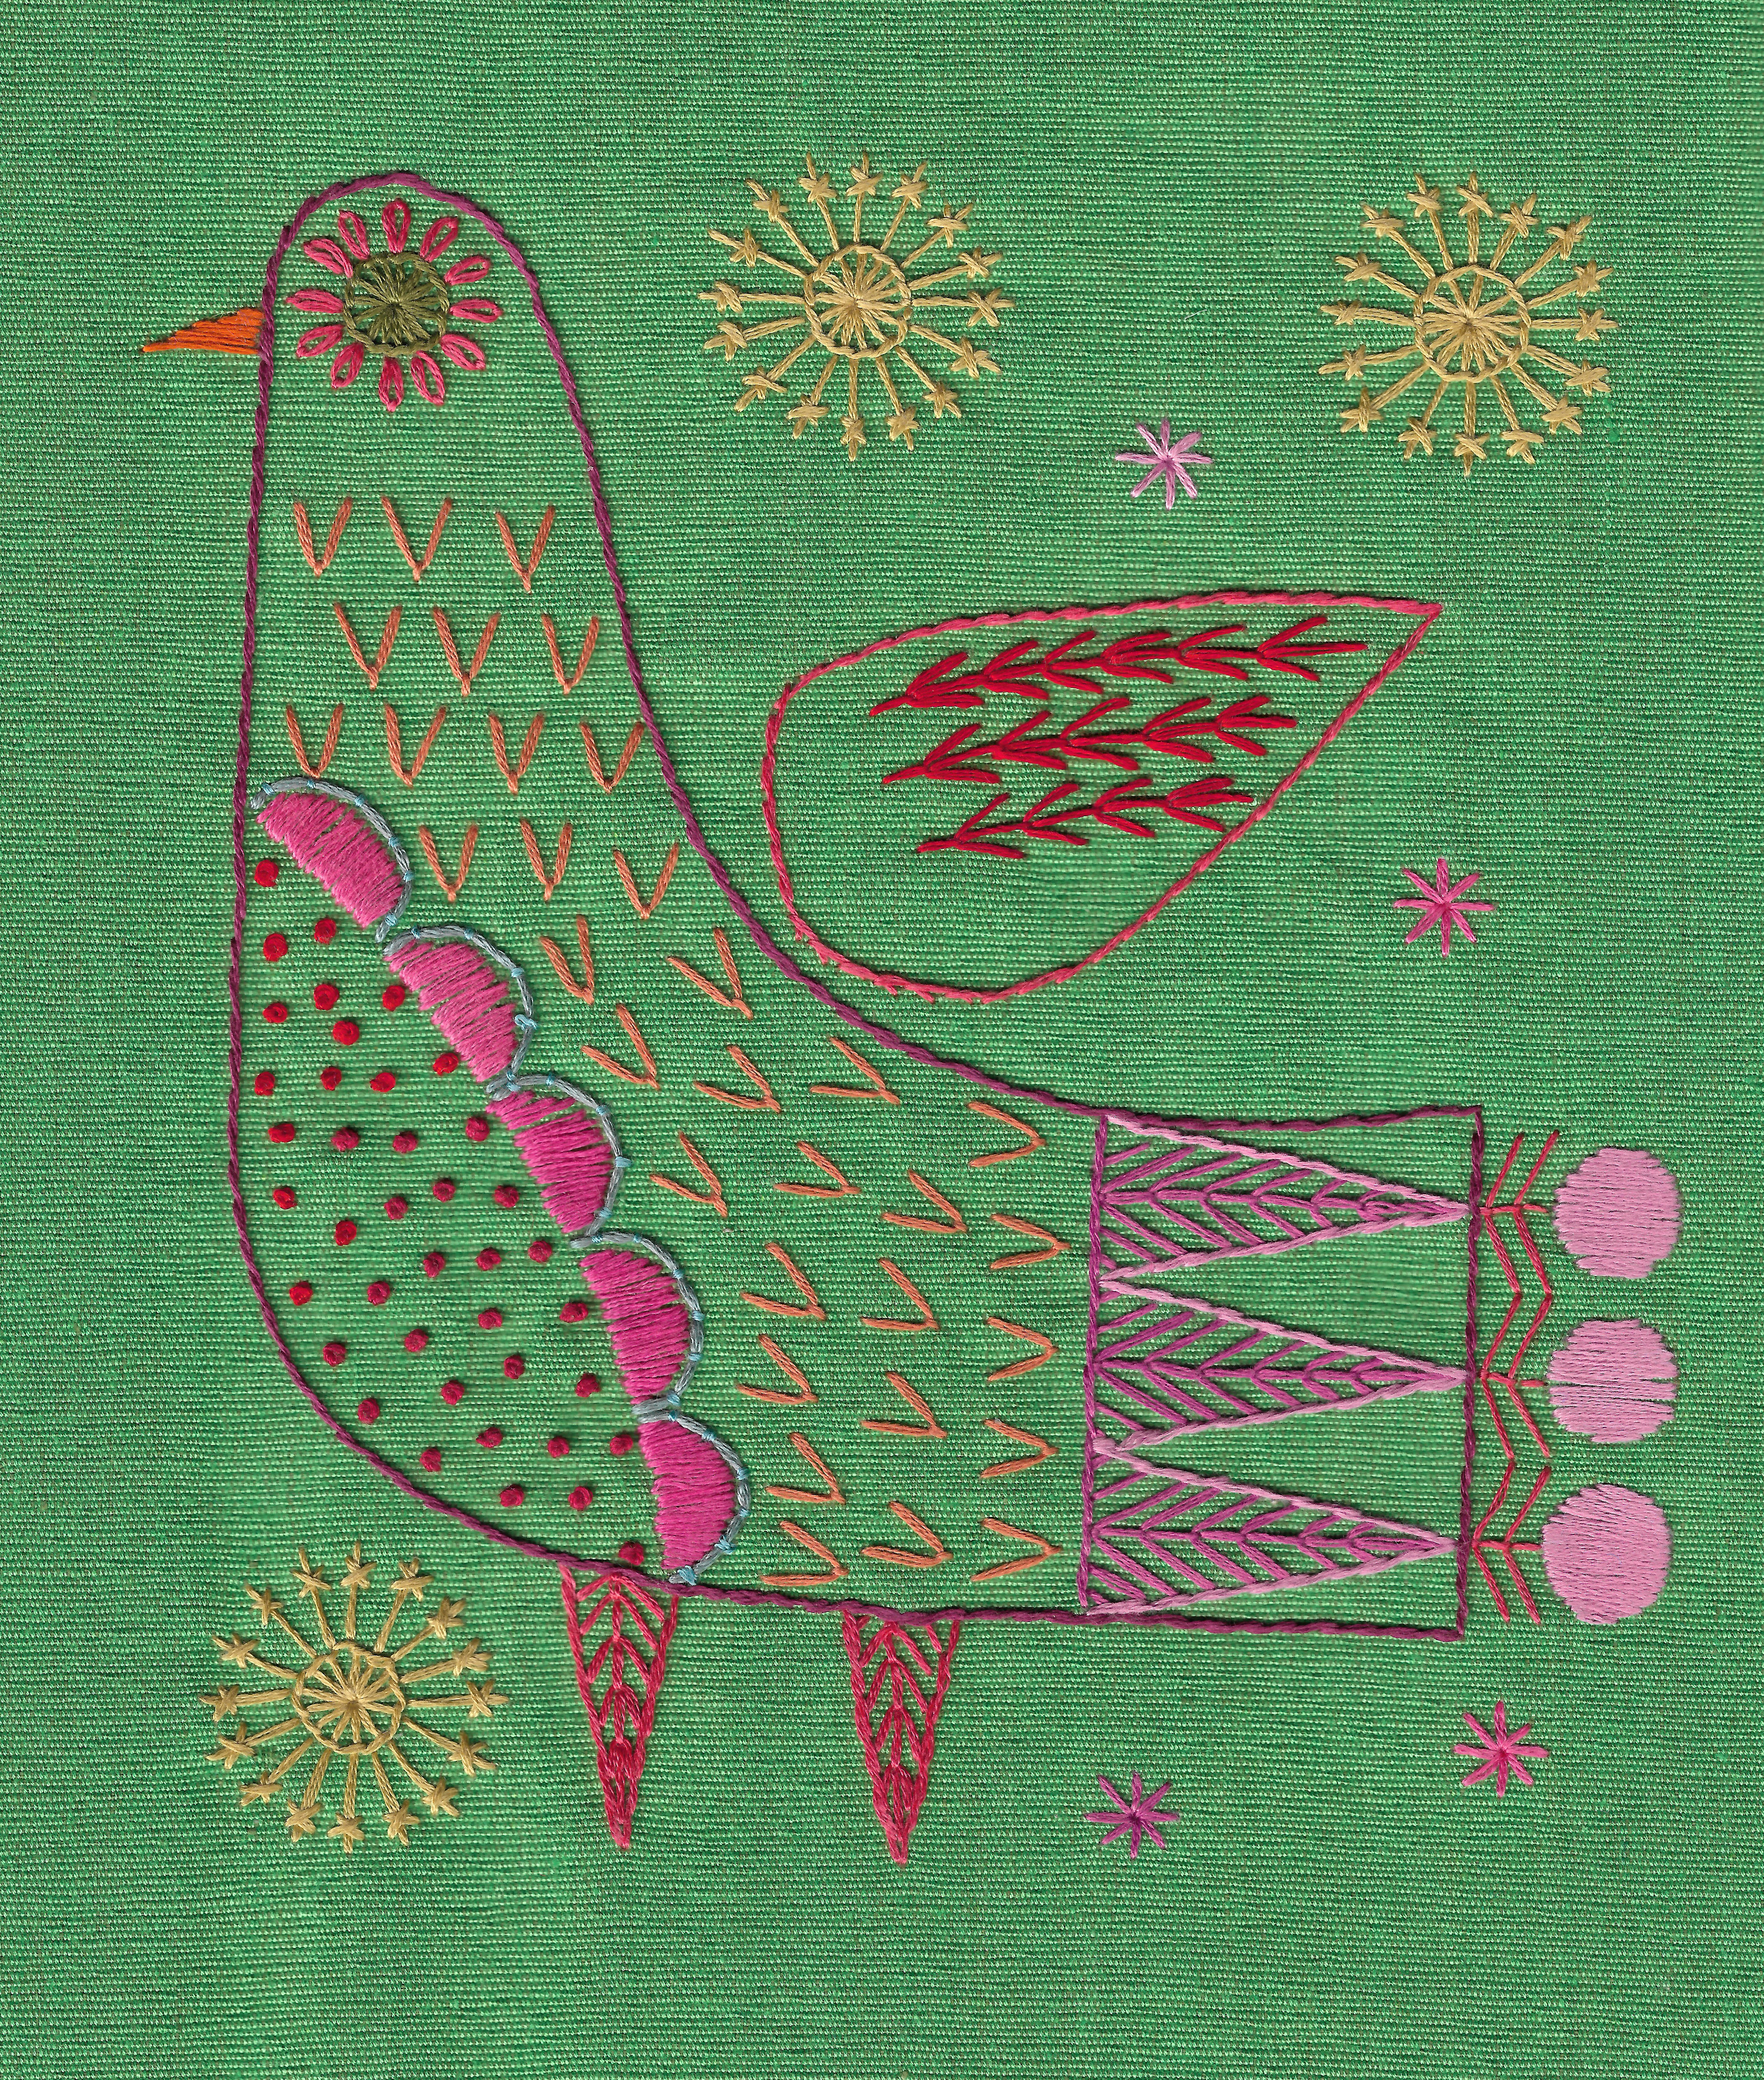 Bird Embroidery Pattern Bright Bird Iron On Transfer Embroidery Pattern